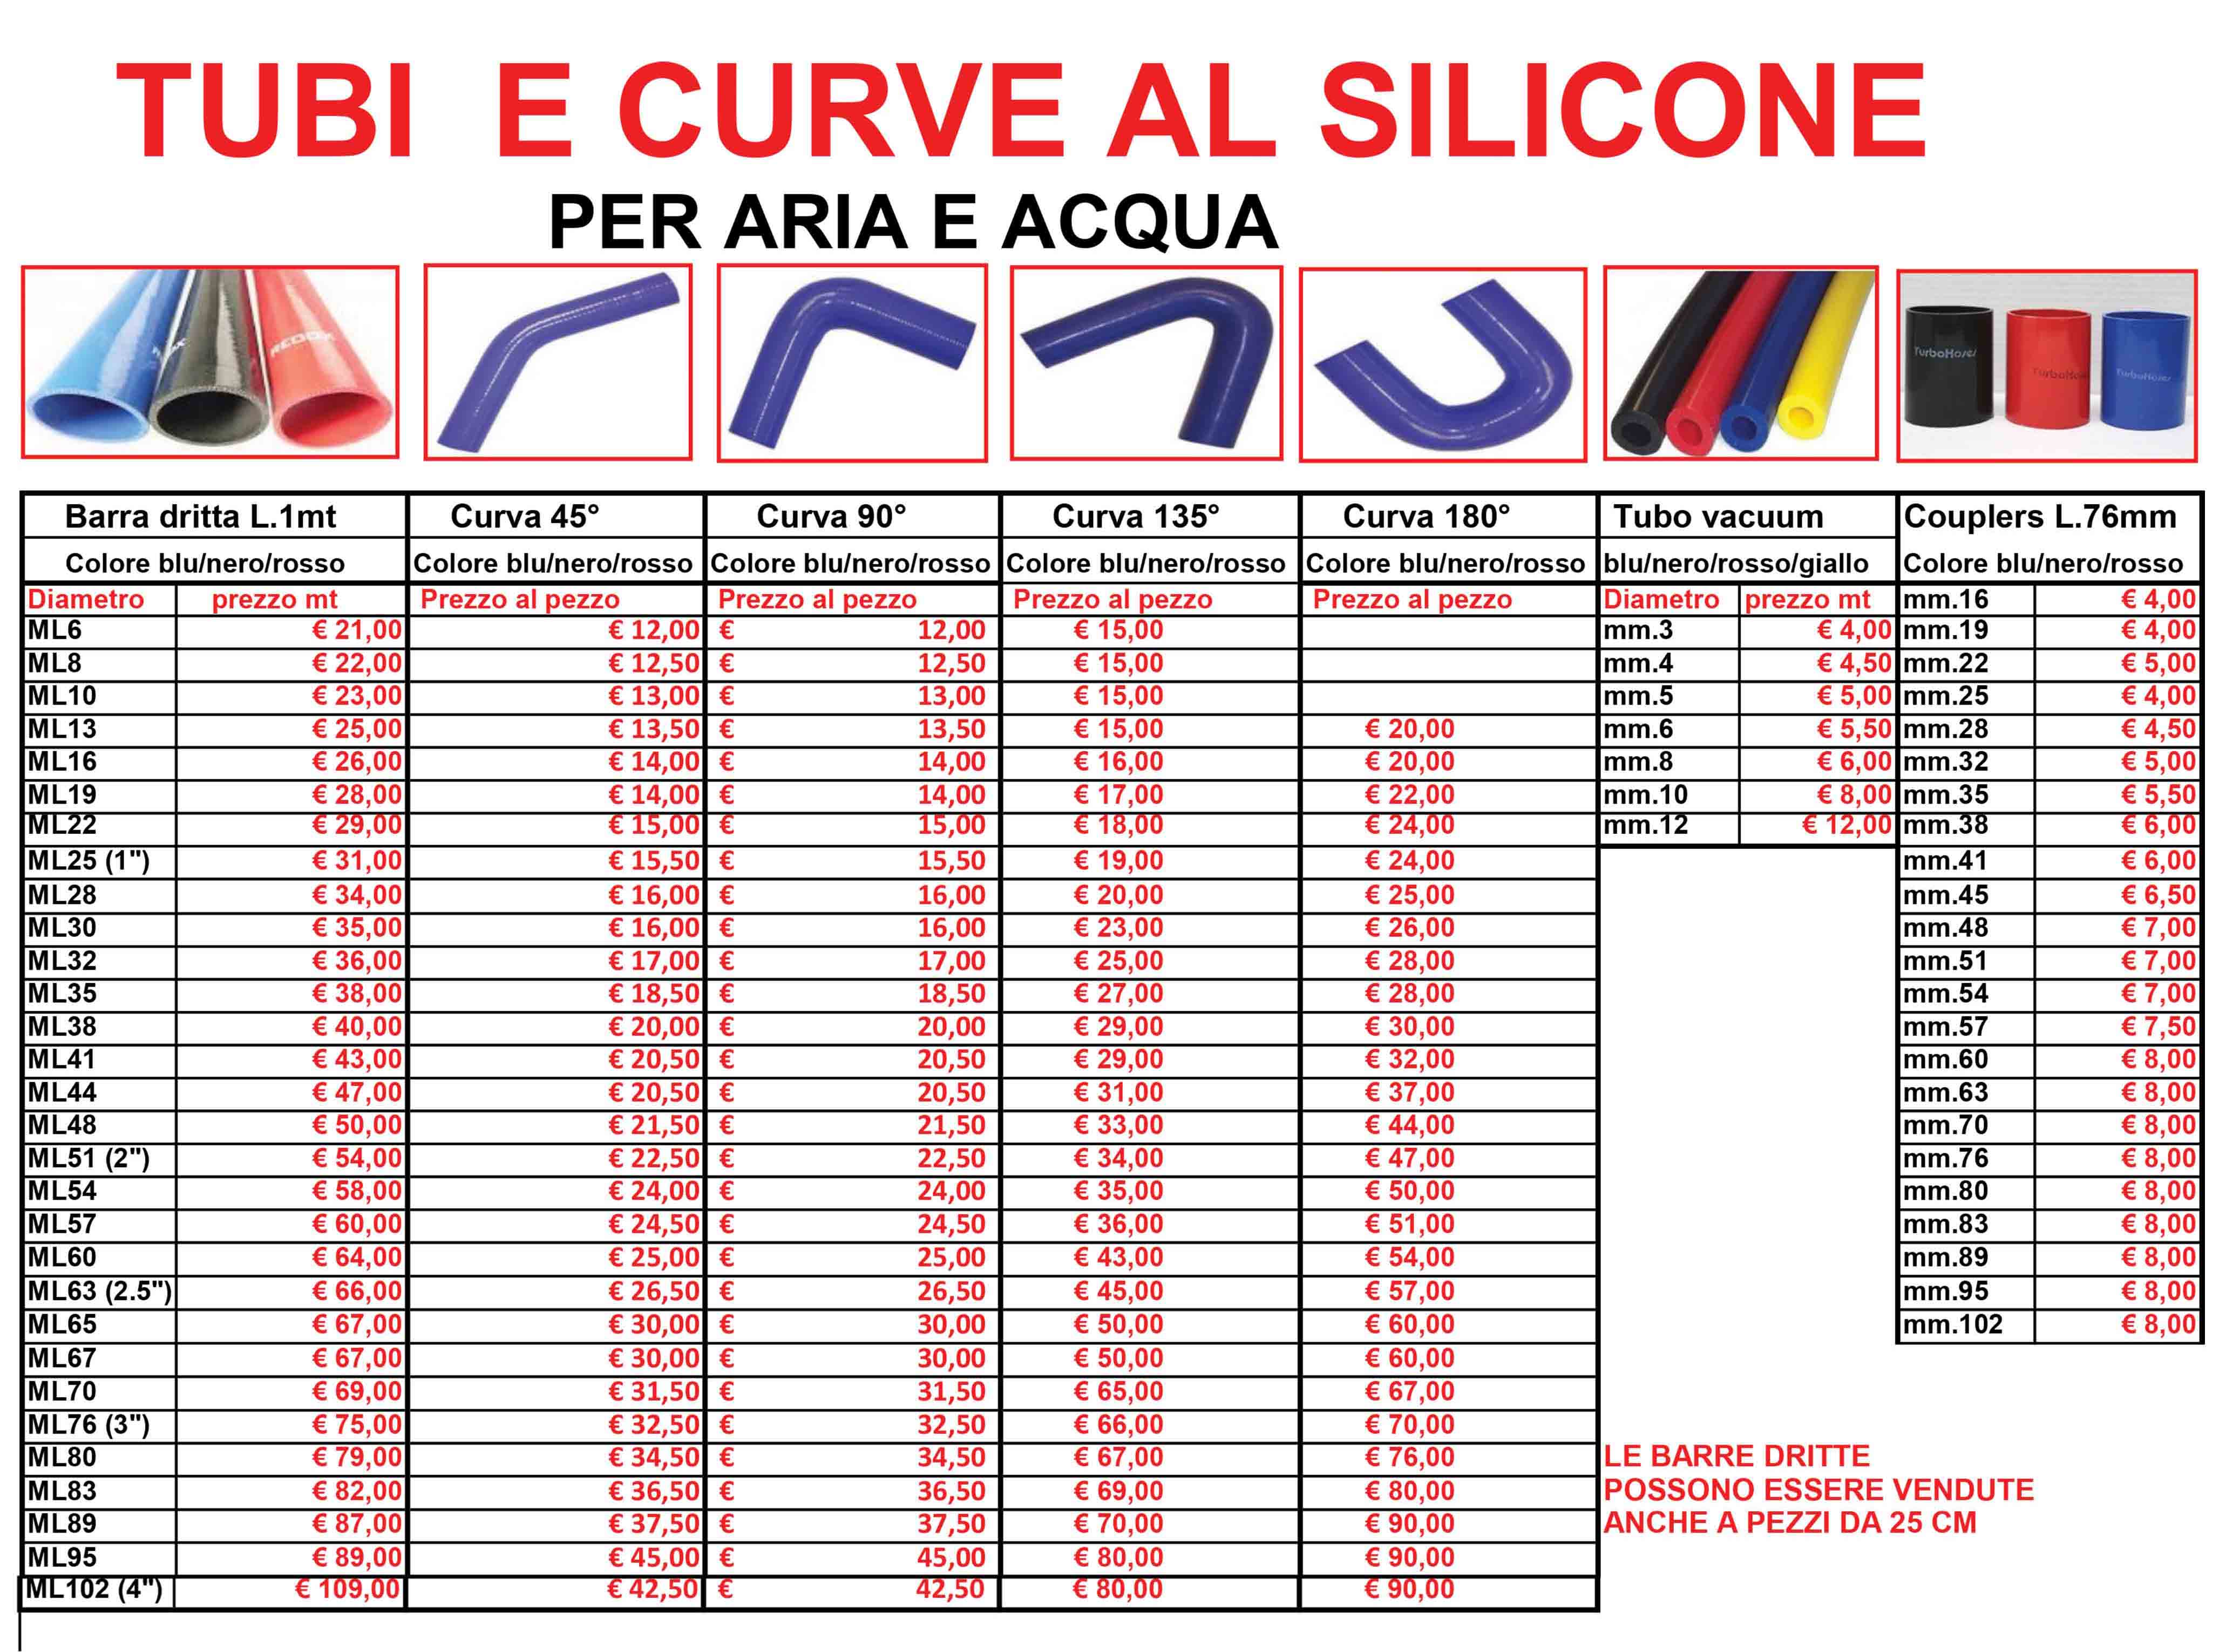 Tubi-curve silicone 2-2019-1